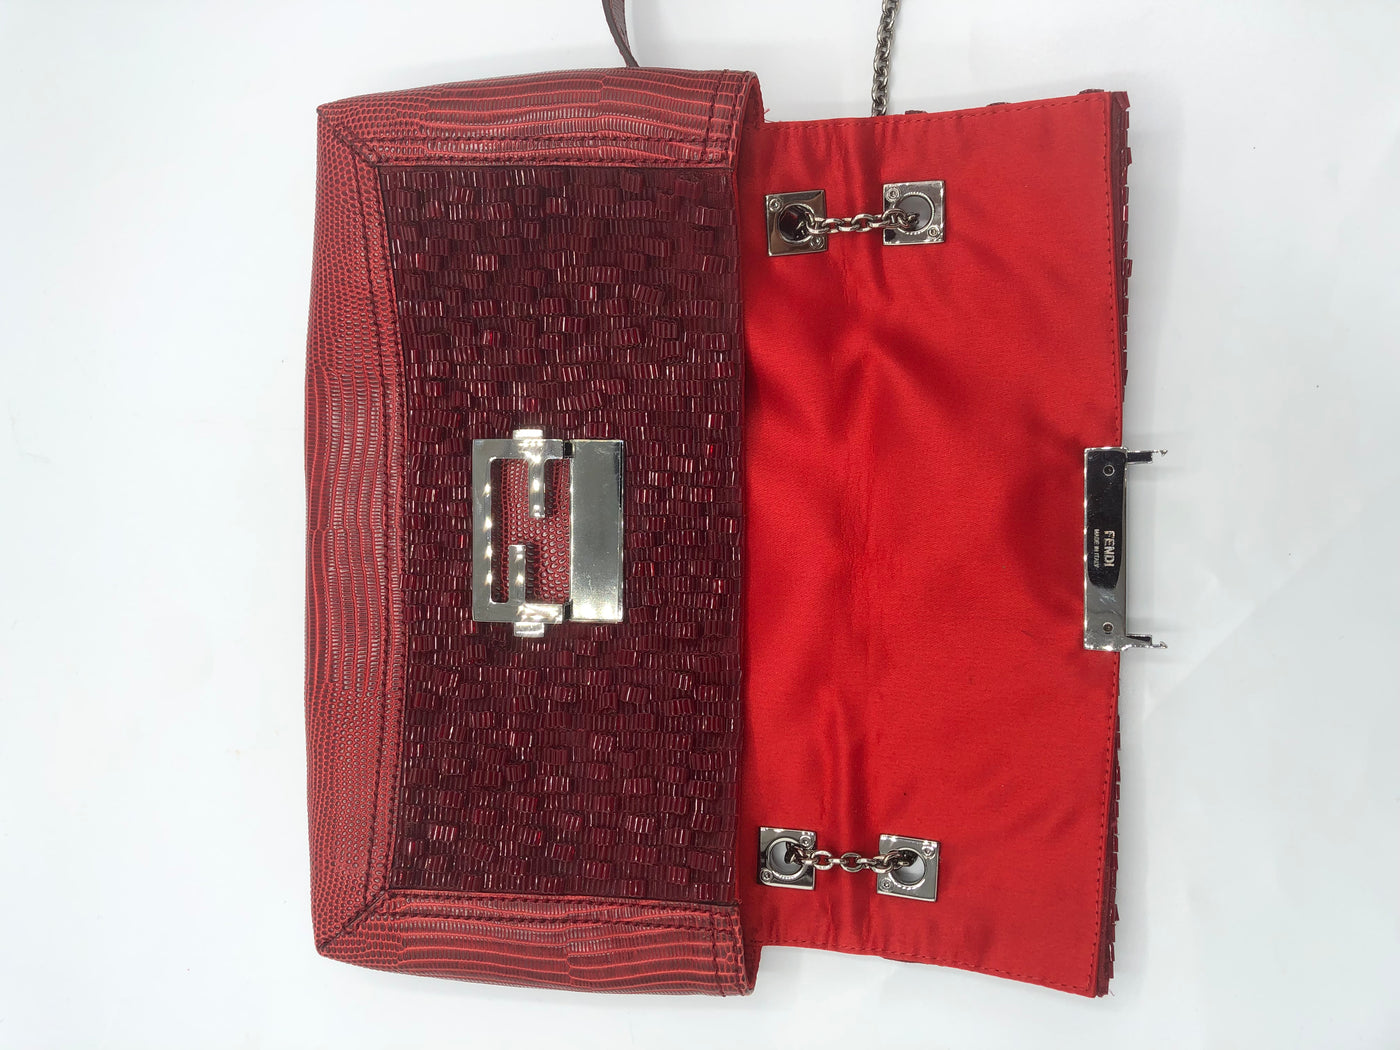 FENDI Beaded Baguette Handbag Limited edition with box